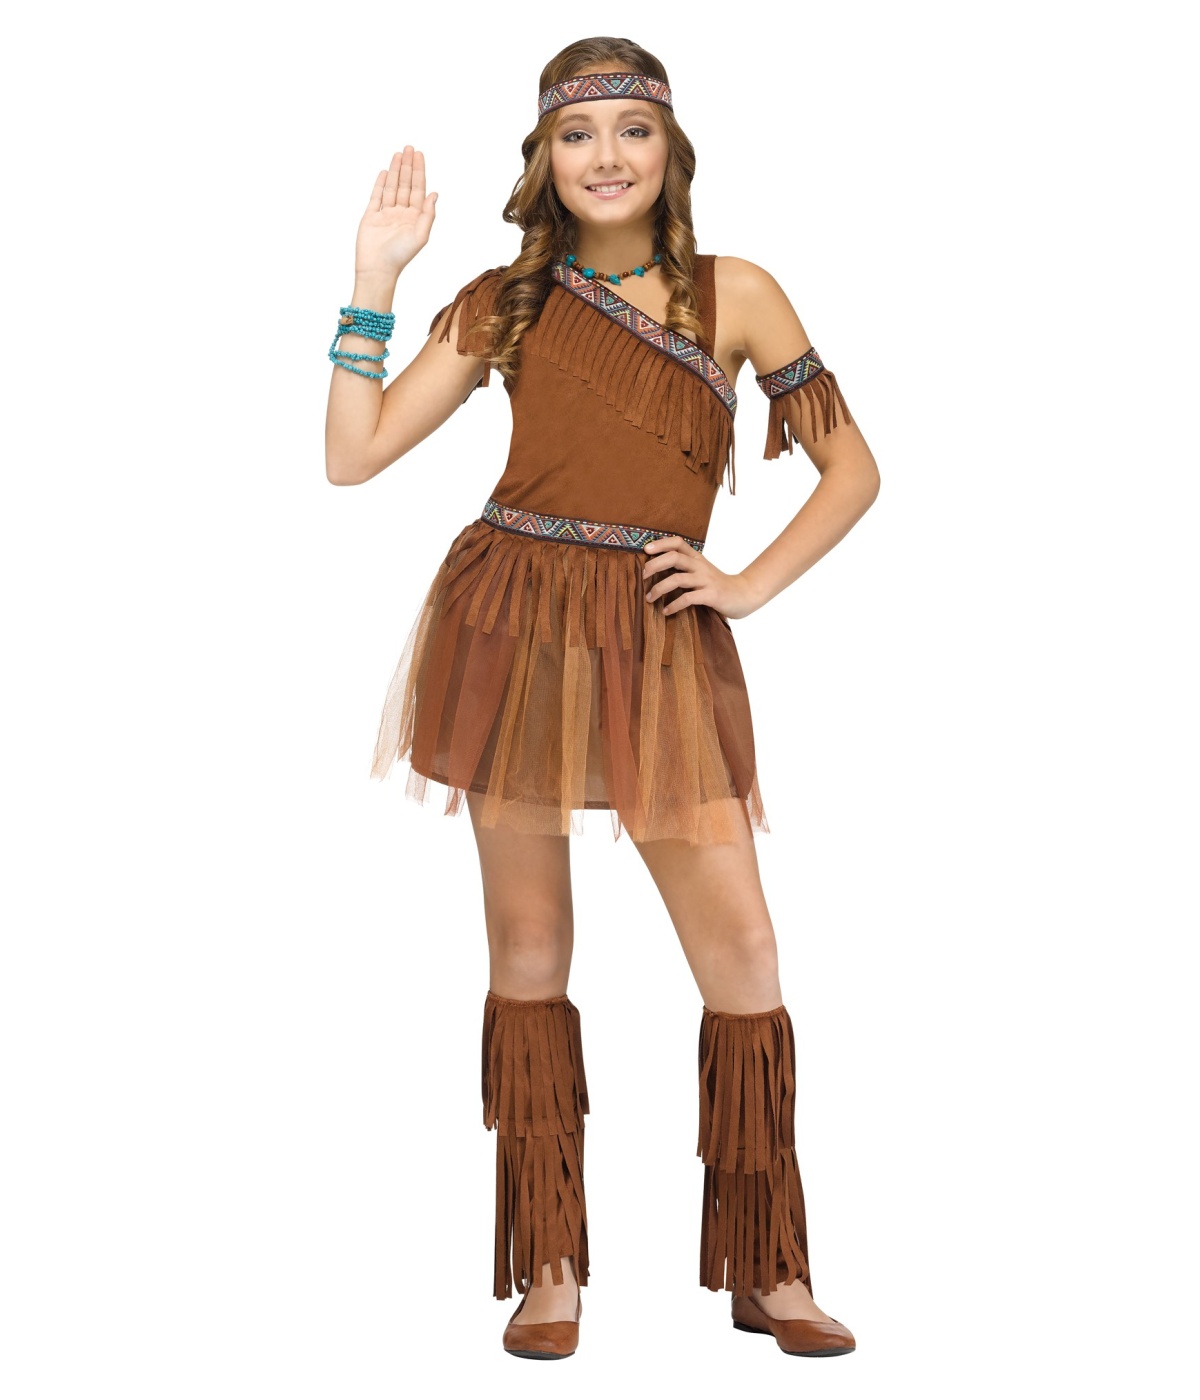  Girls Native American Costume